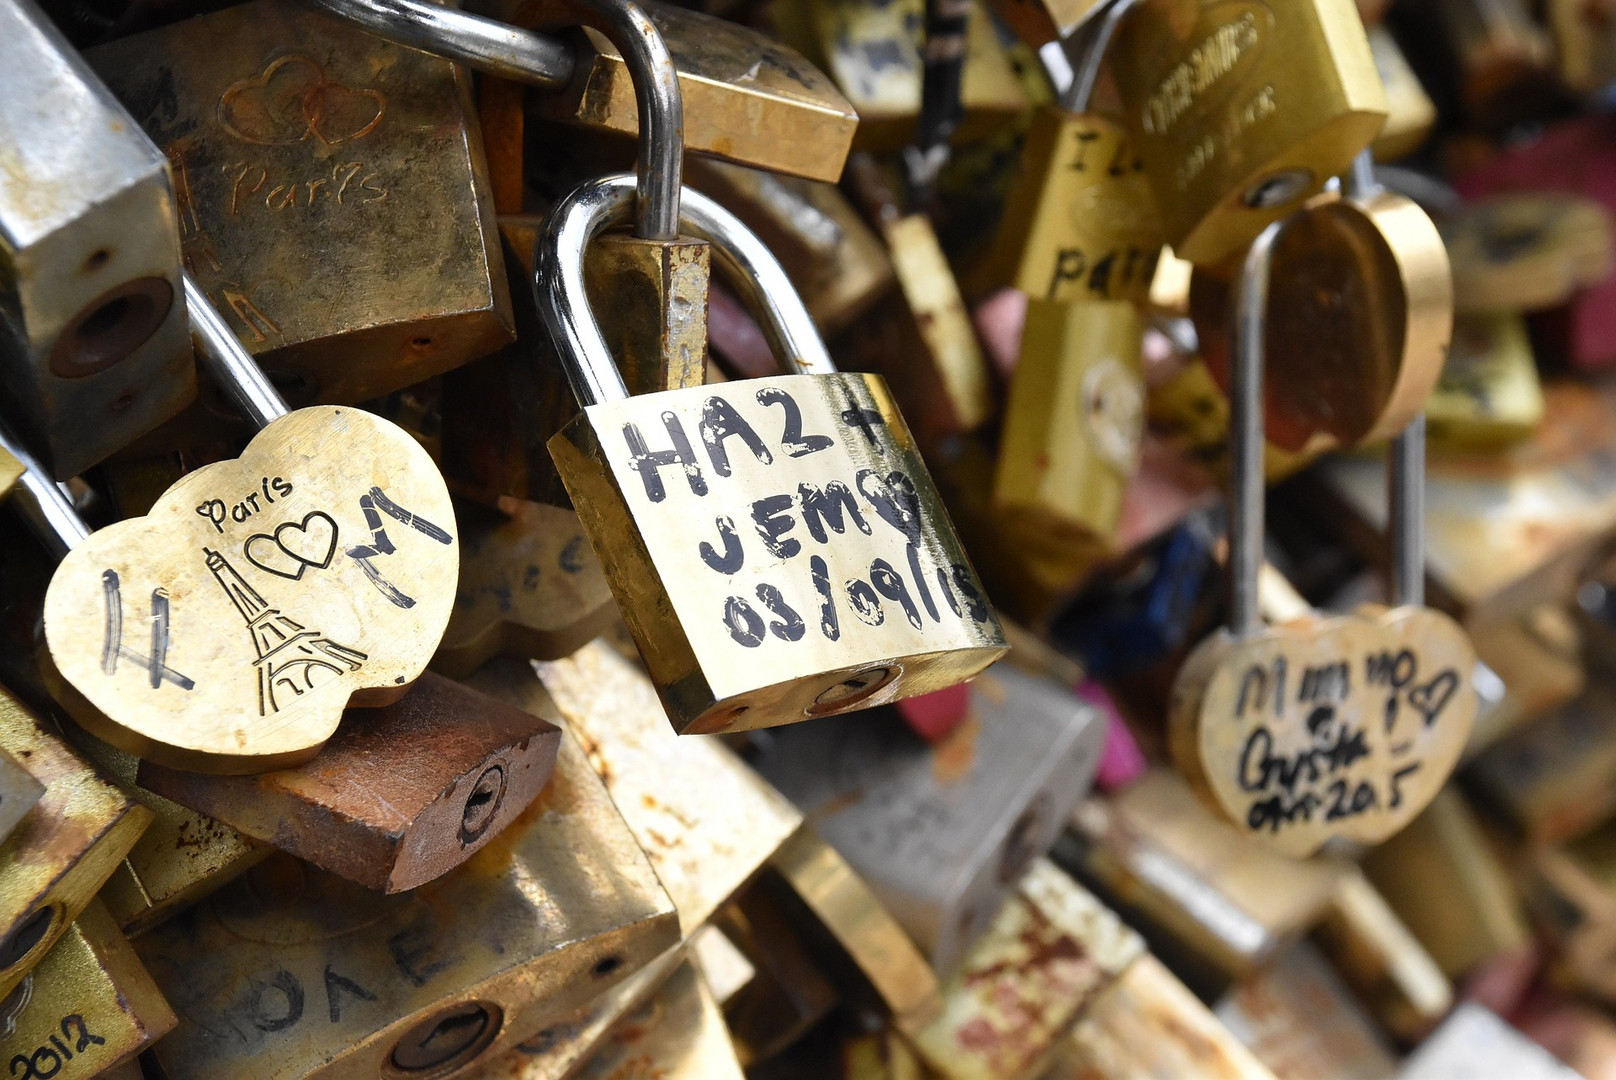 Verliebten-Schlösser an der Pariser Brücke